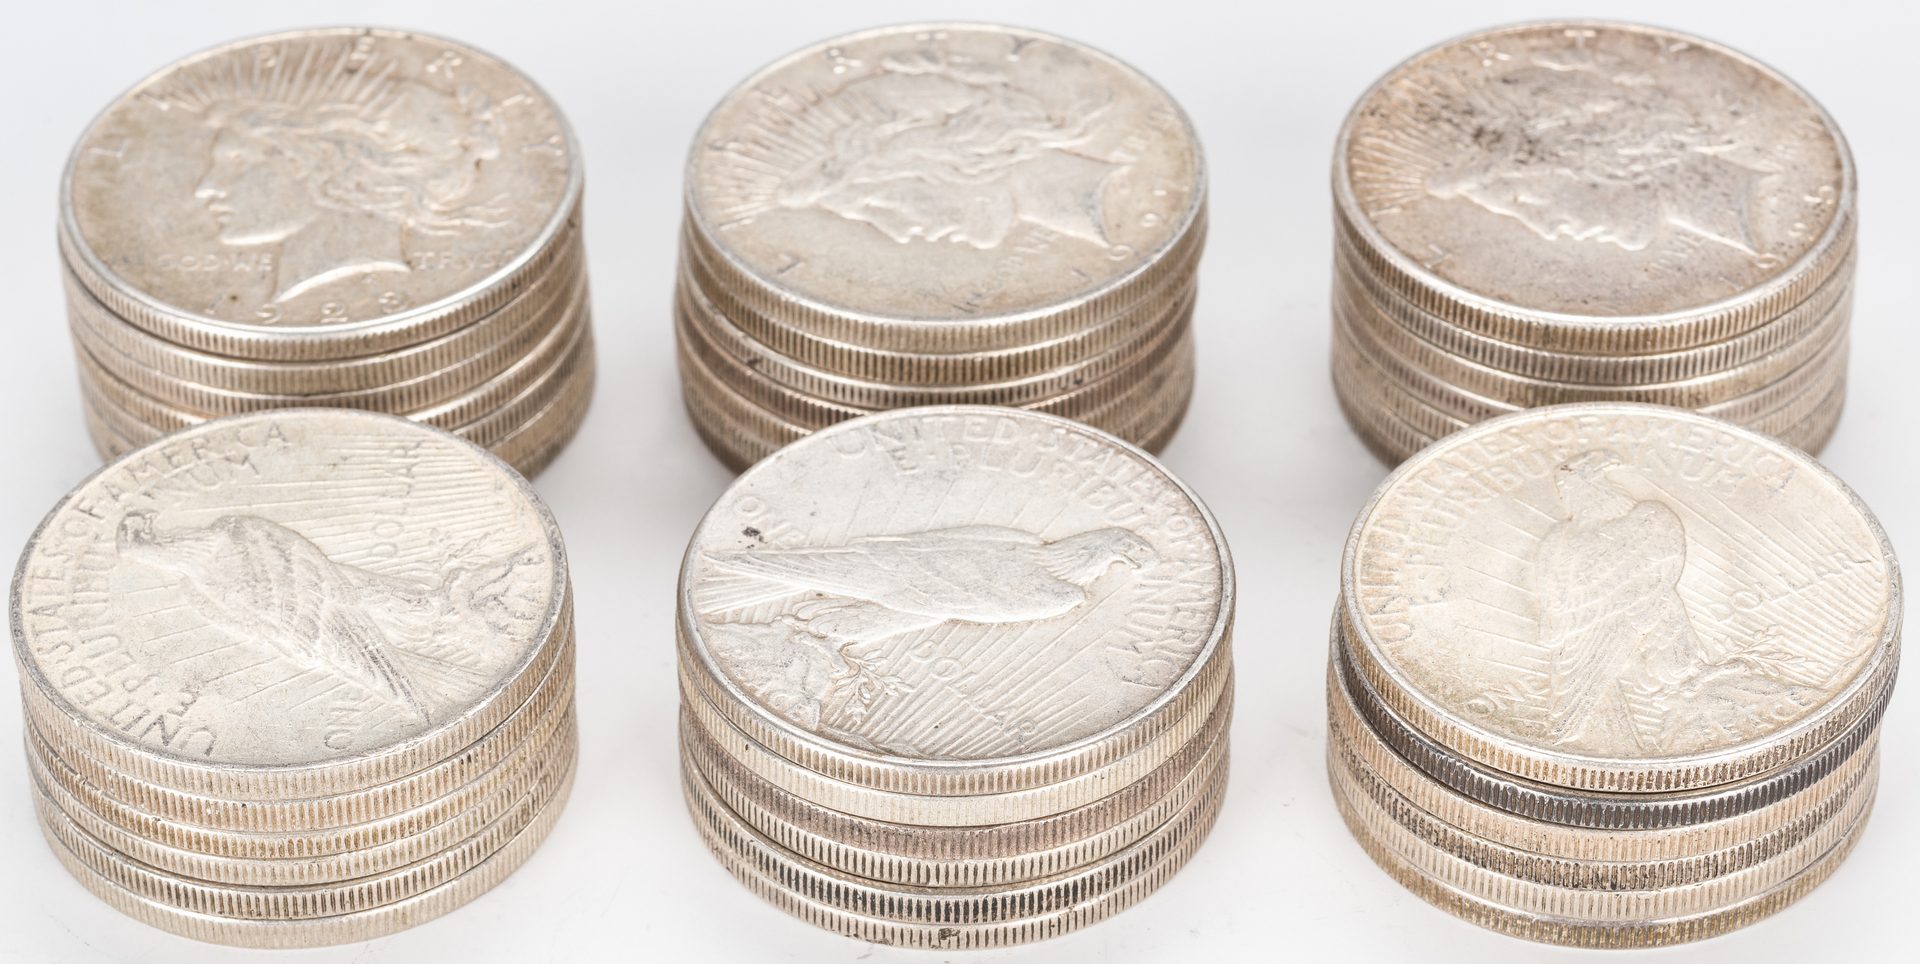 Lot 889: 39 U.S. Peace Silver Dollars (1922-1935)